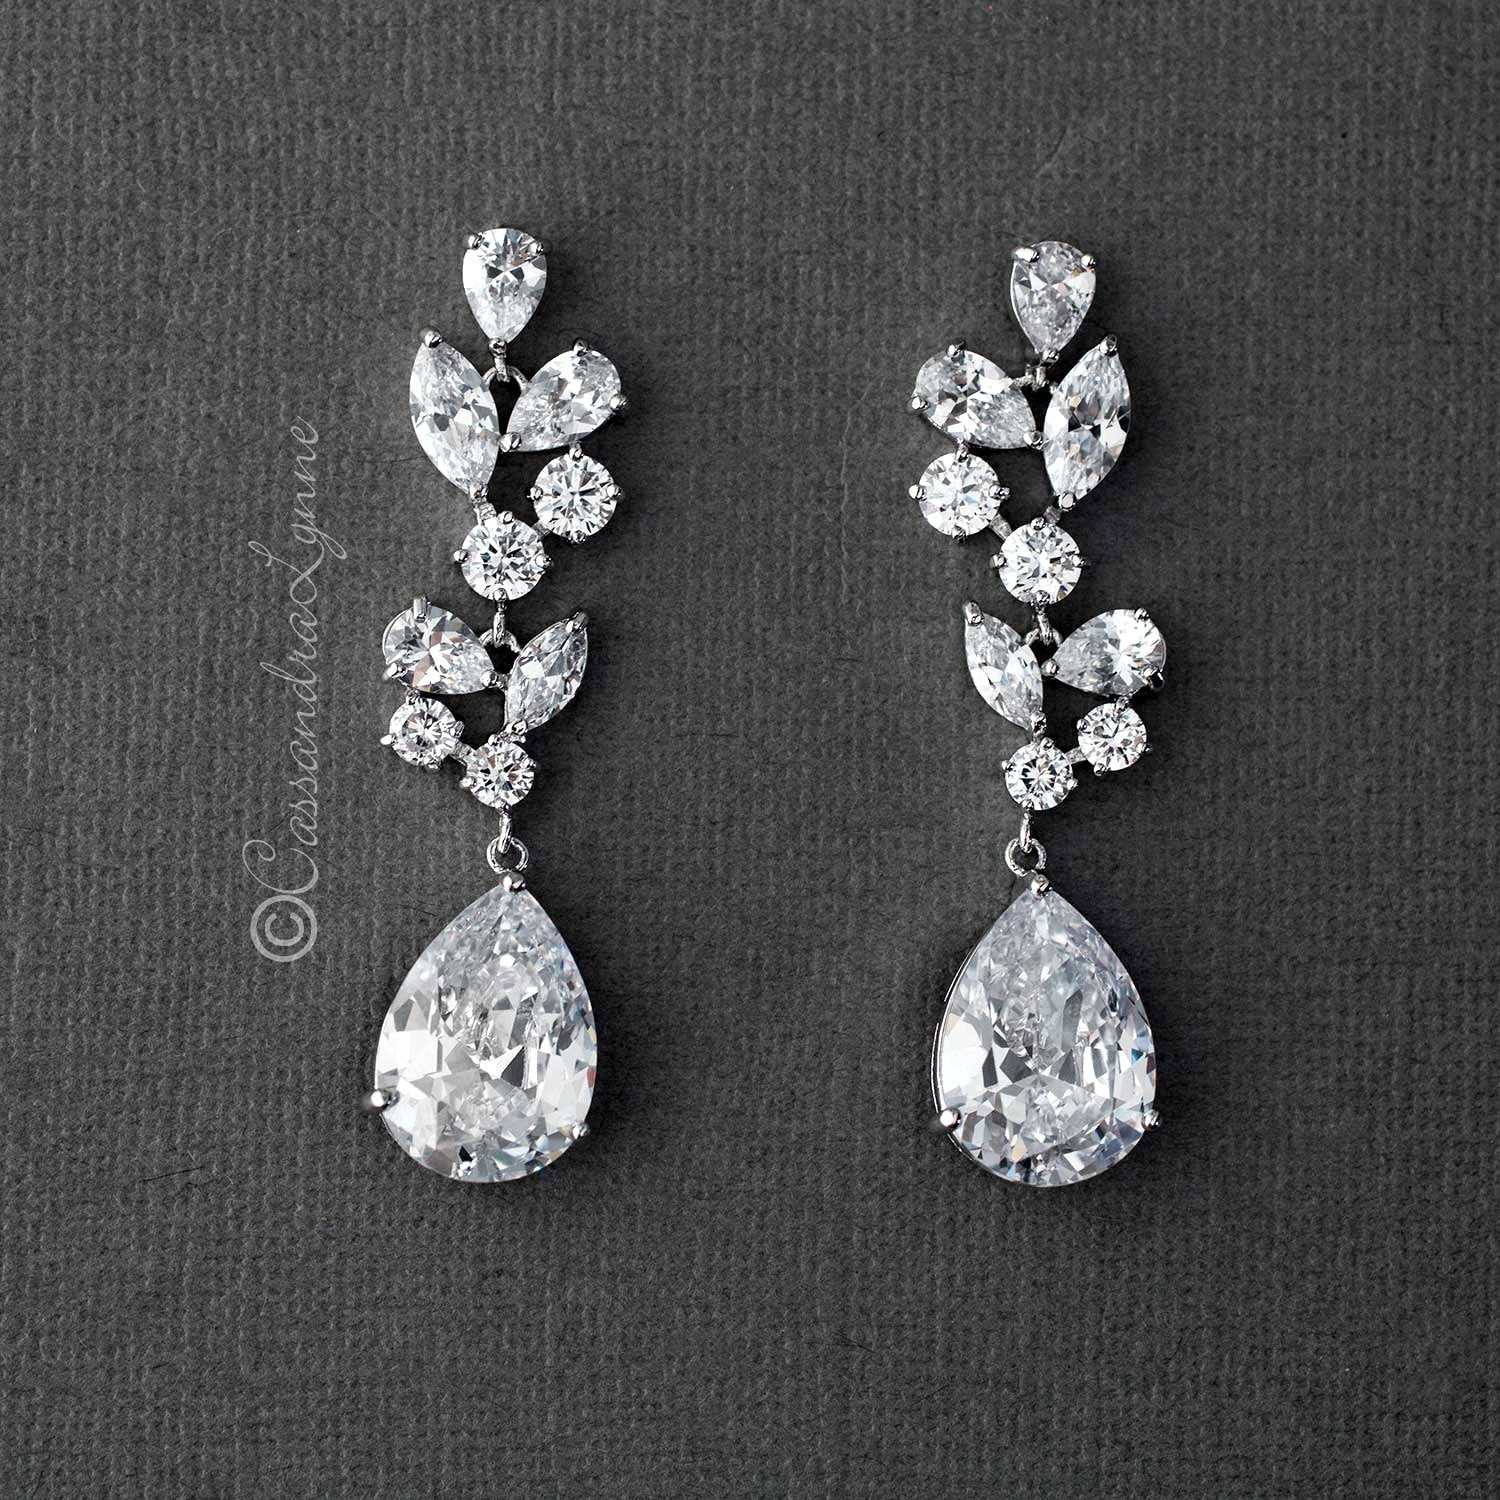 Bridal Earrings of Large CZ Drops